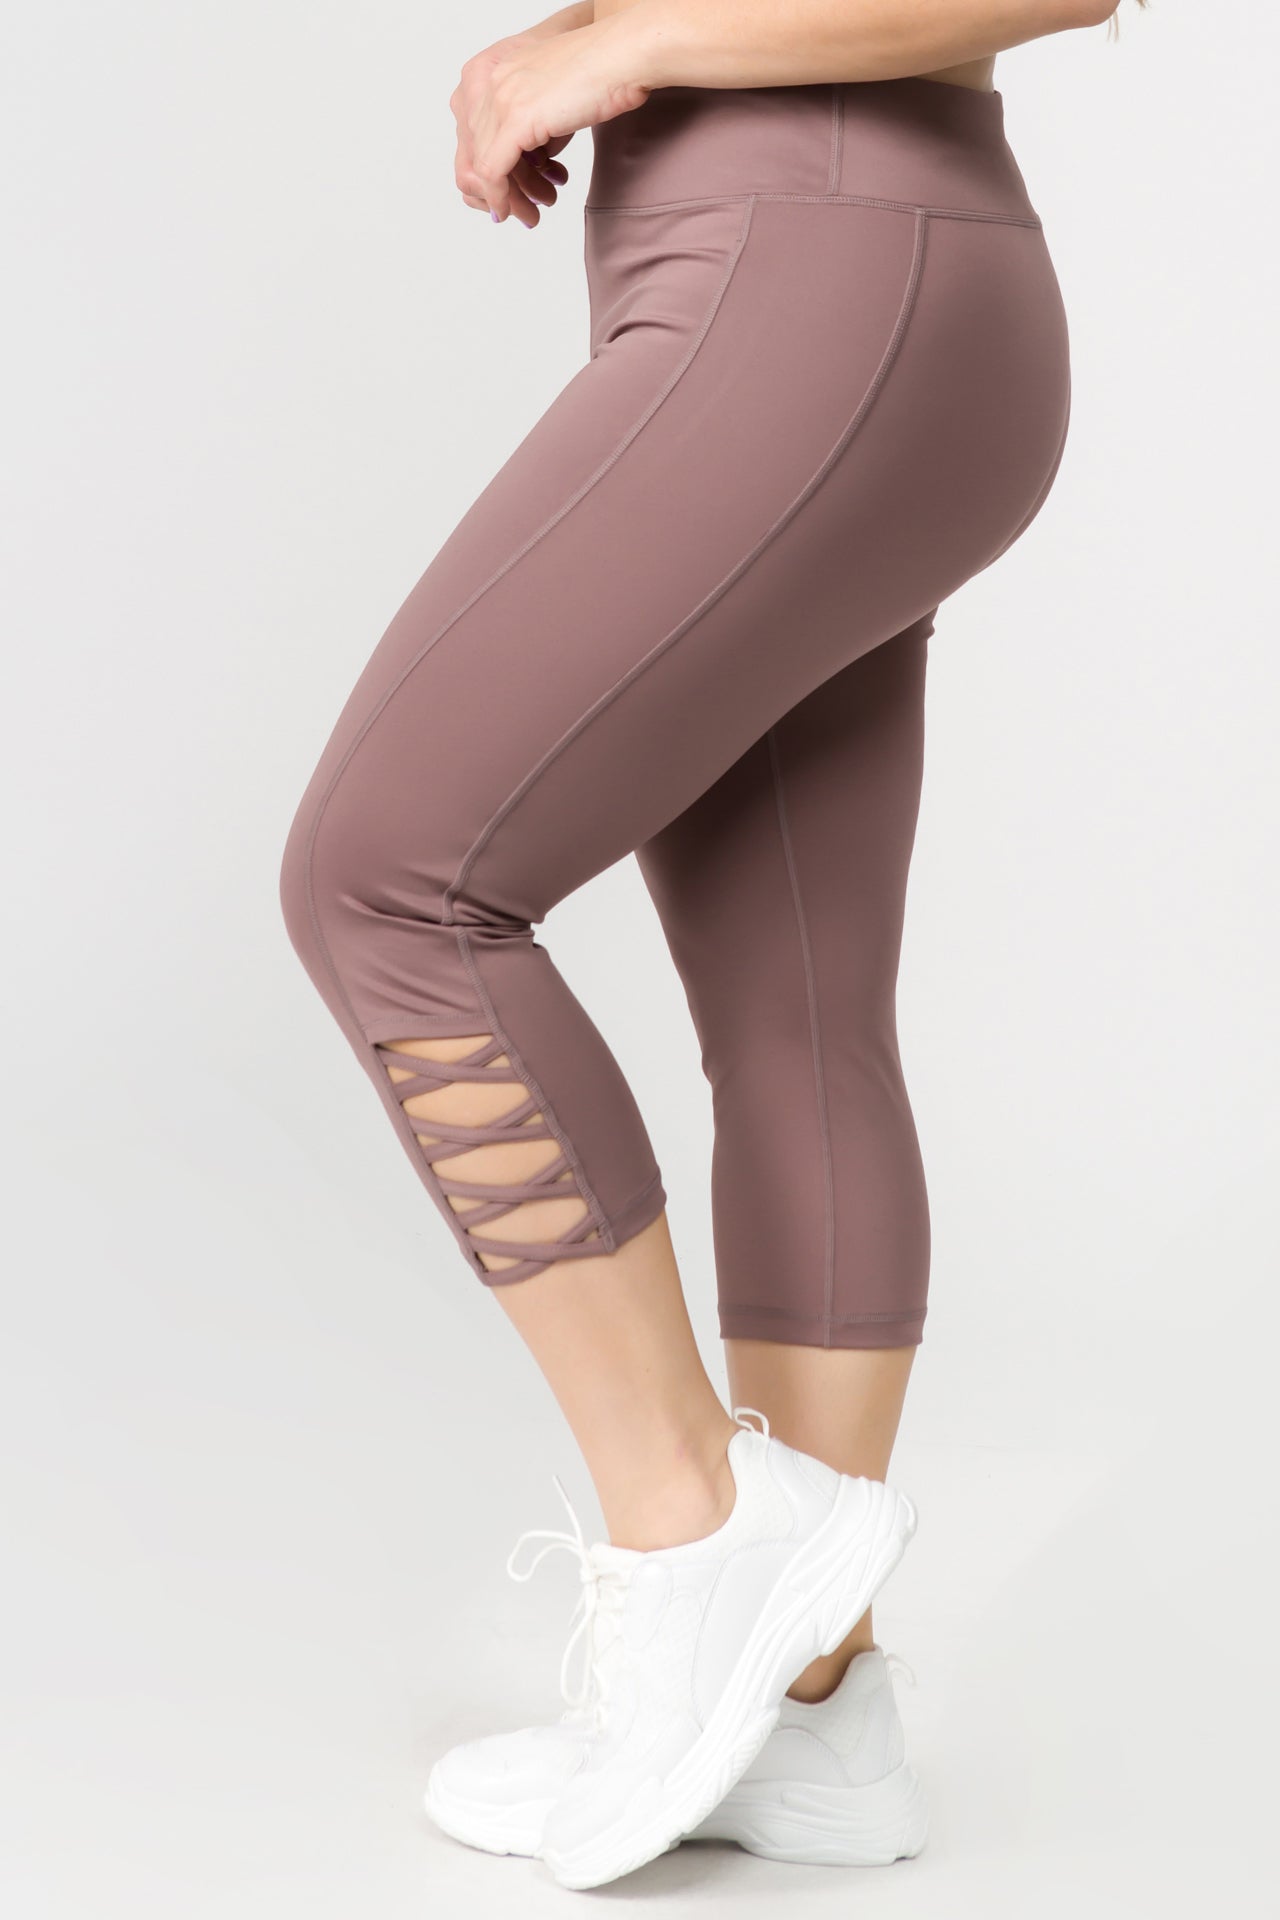 ICONOFLASH Women's Basic Solid Color Nylon Capri Leggings